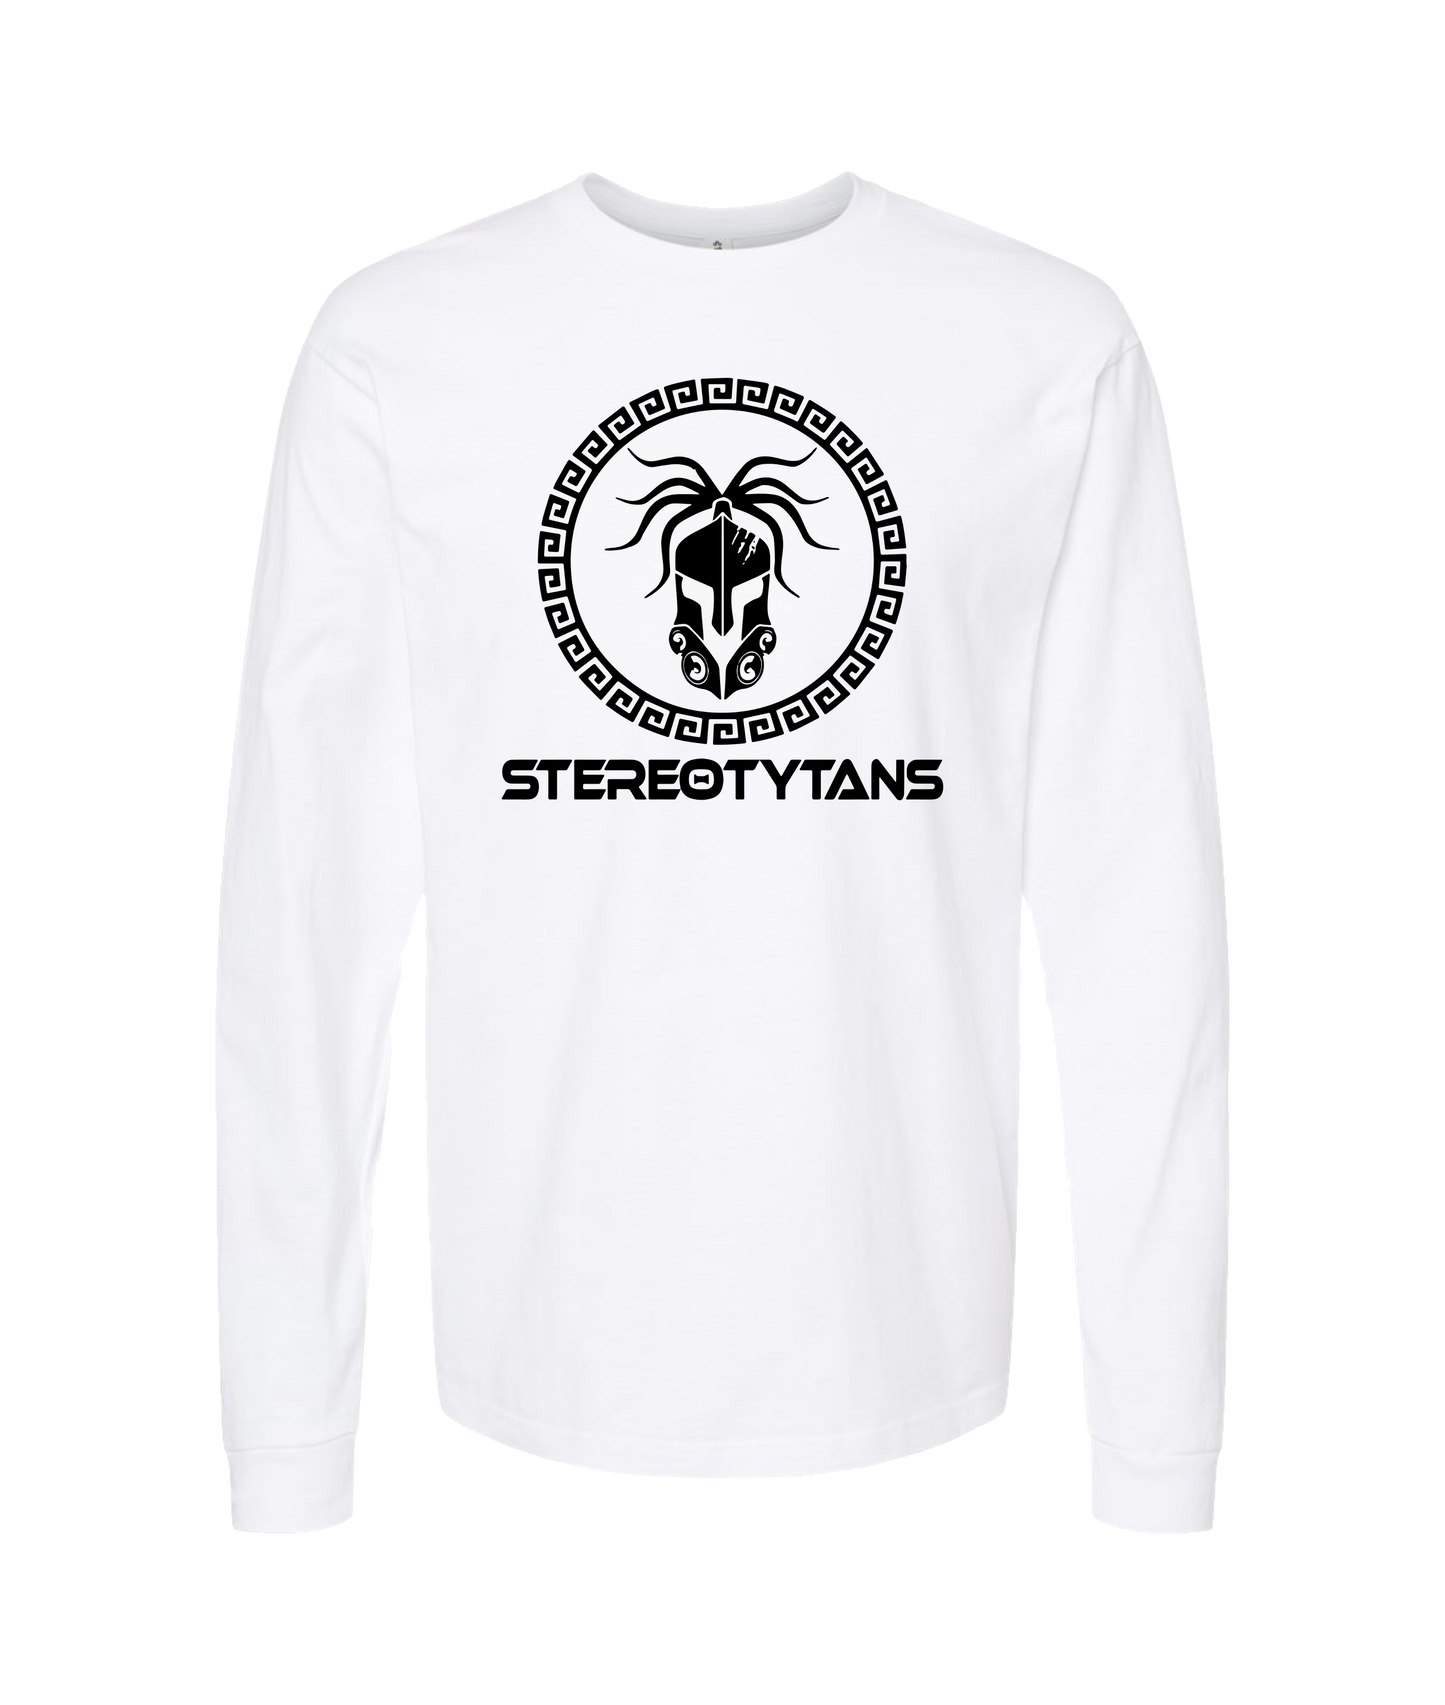 Stereotytans - Circle Logo - White Long Sleeve T